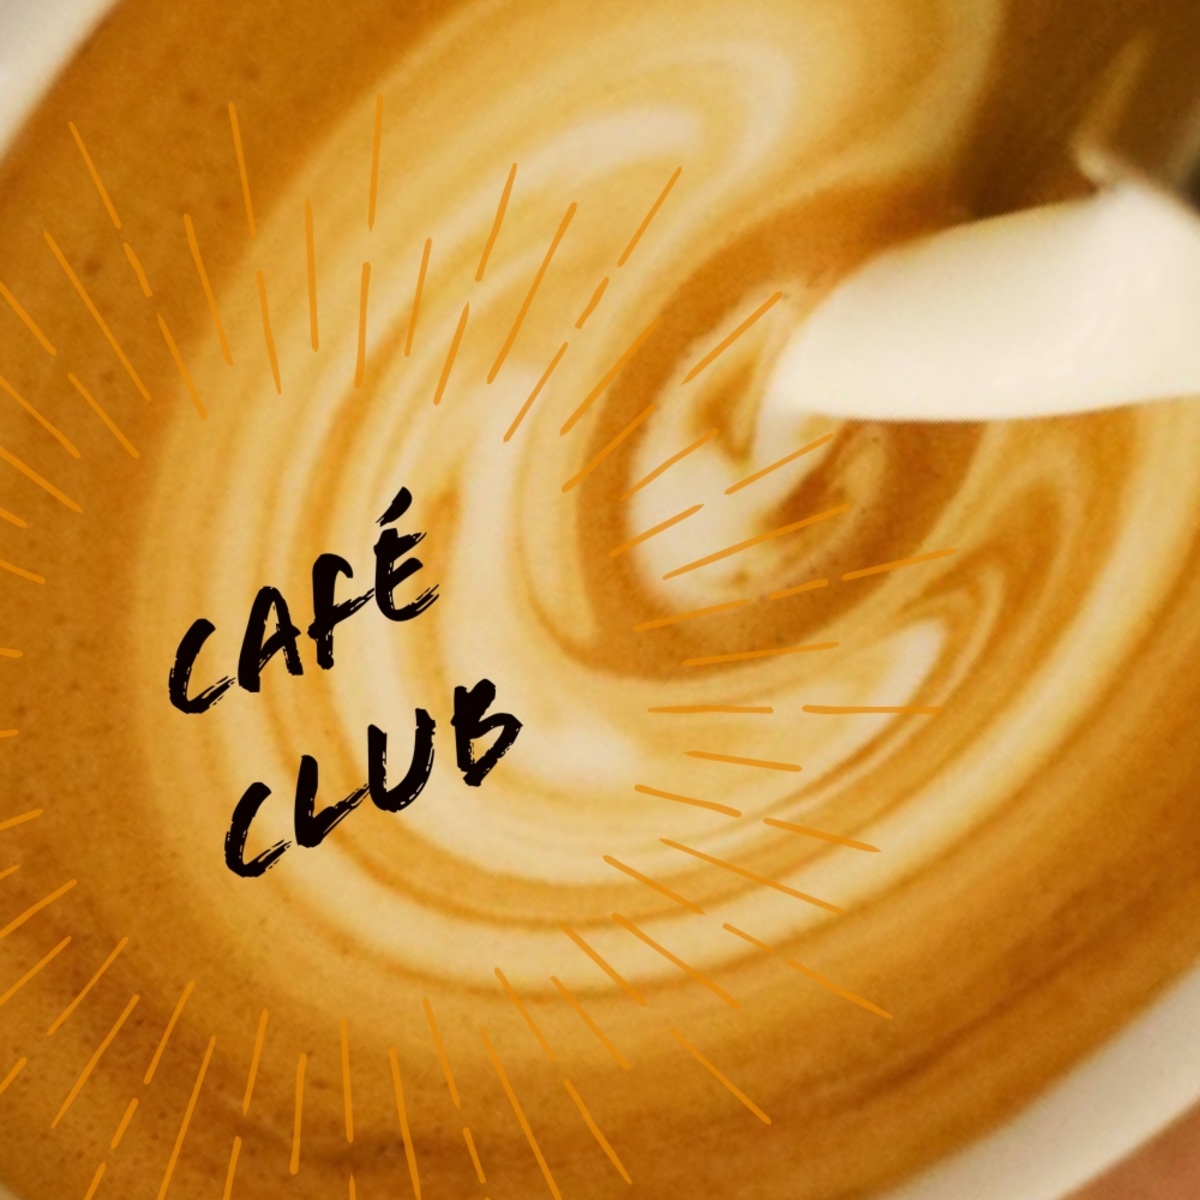 VA - Café Club / MCT Luxury